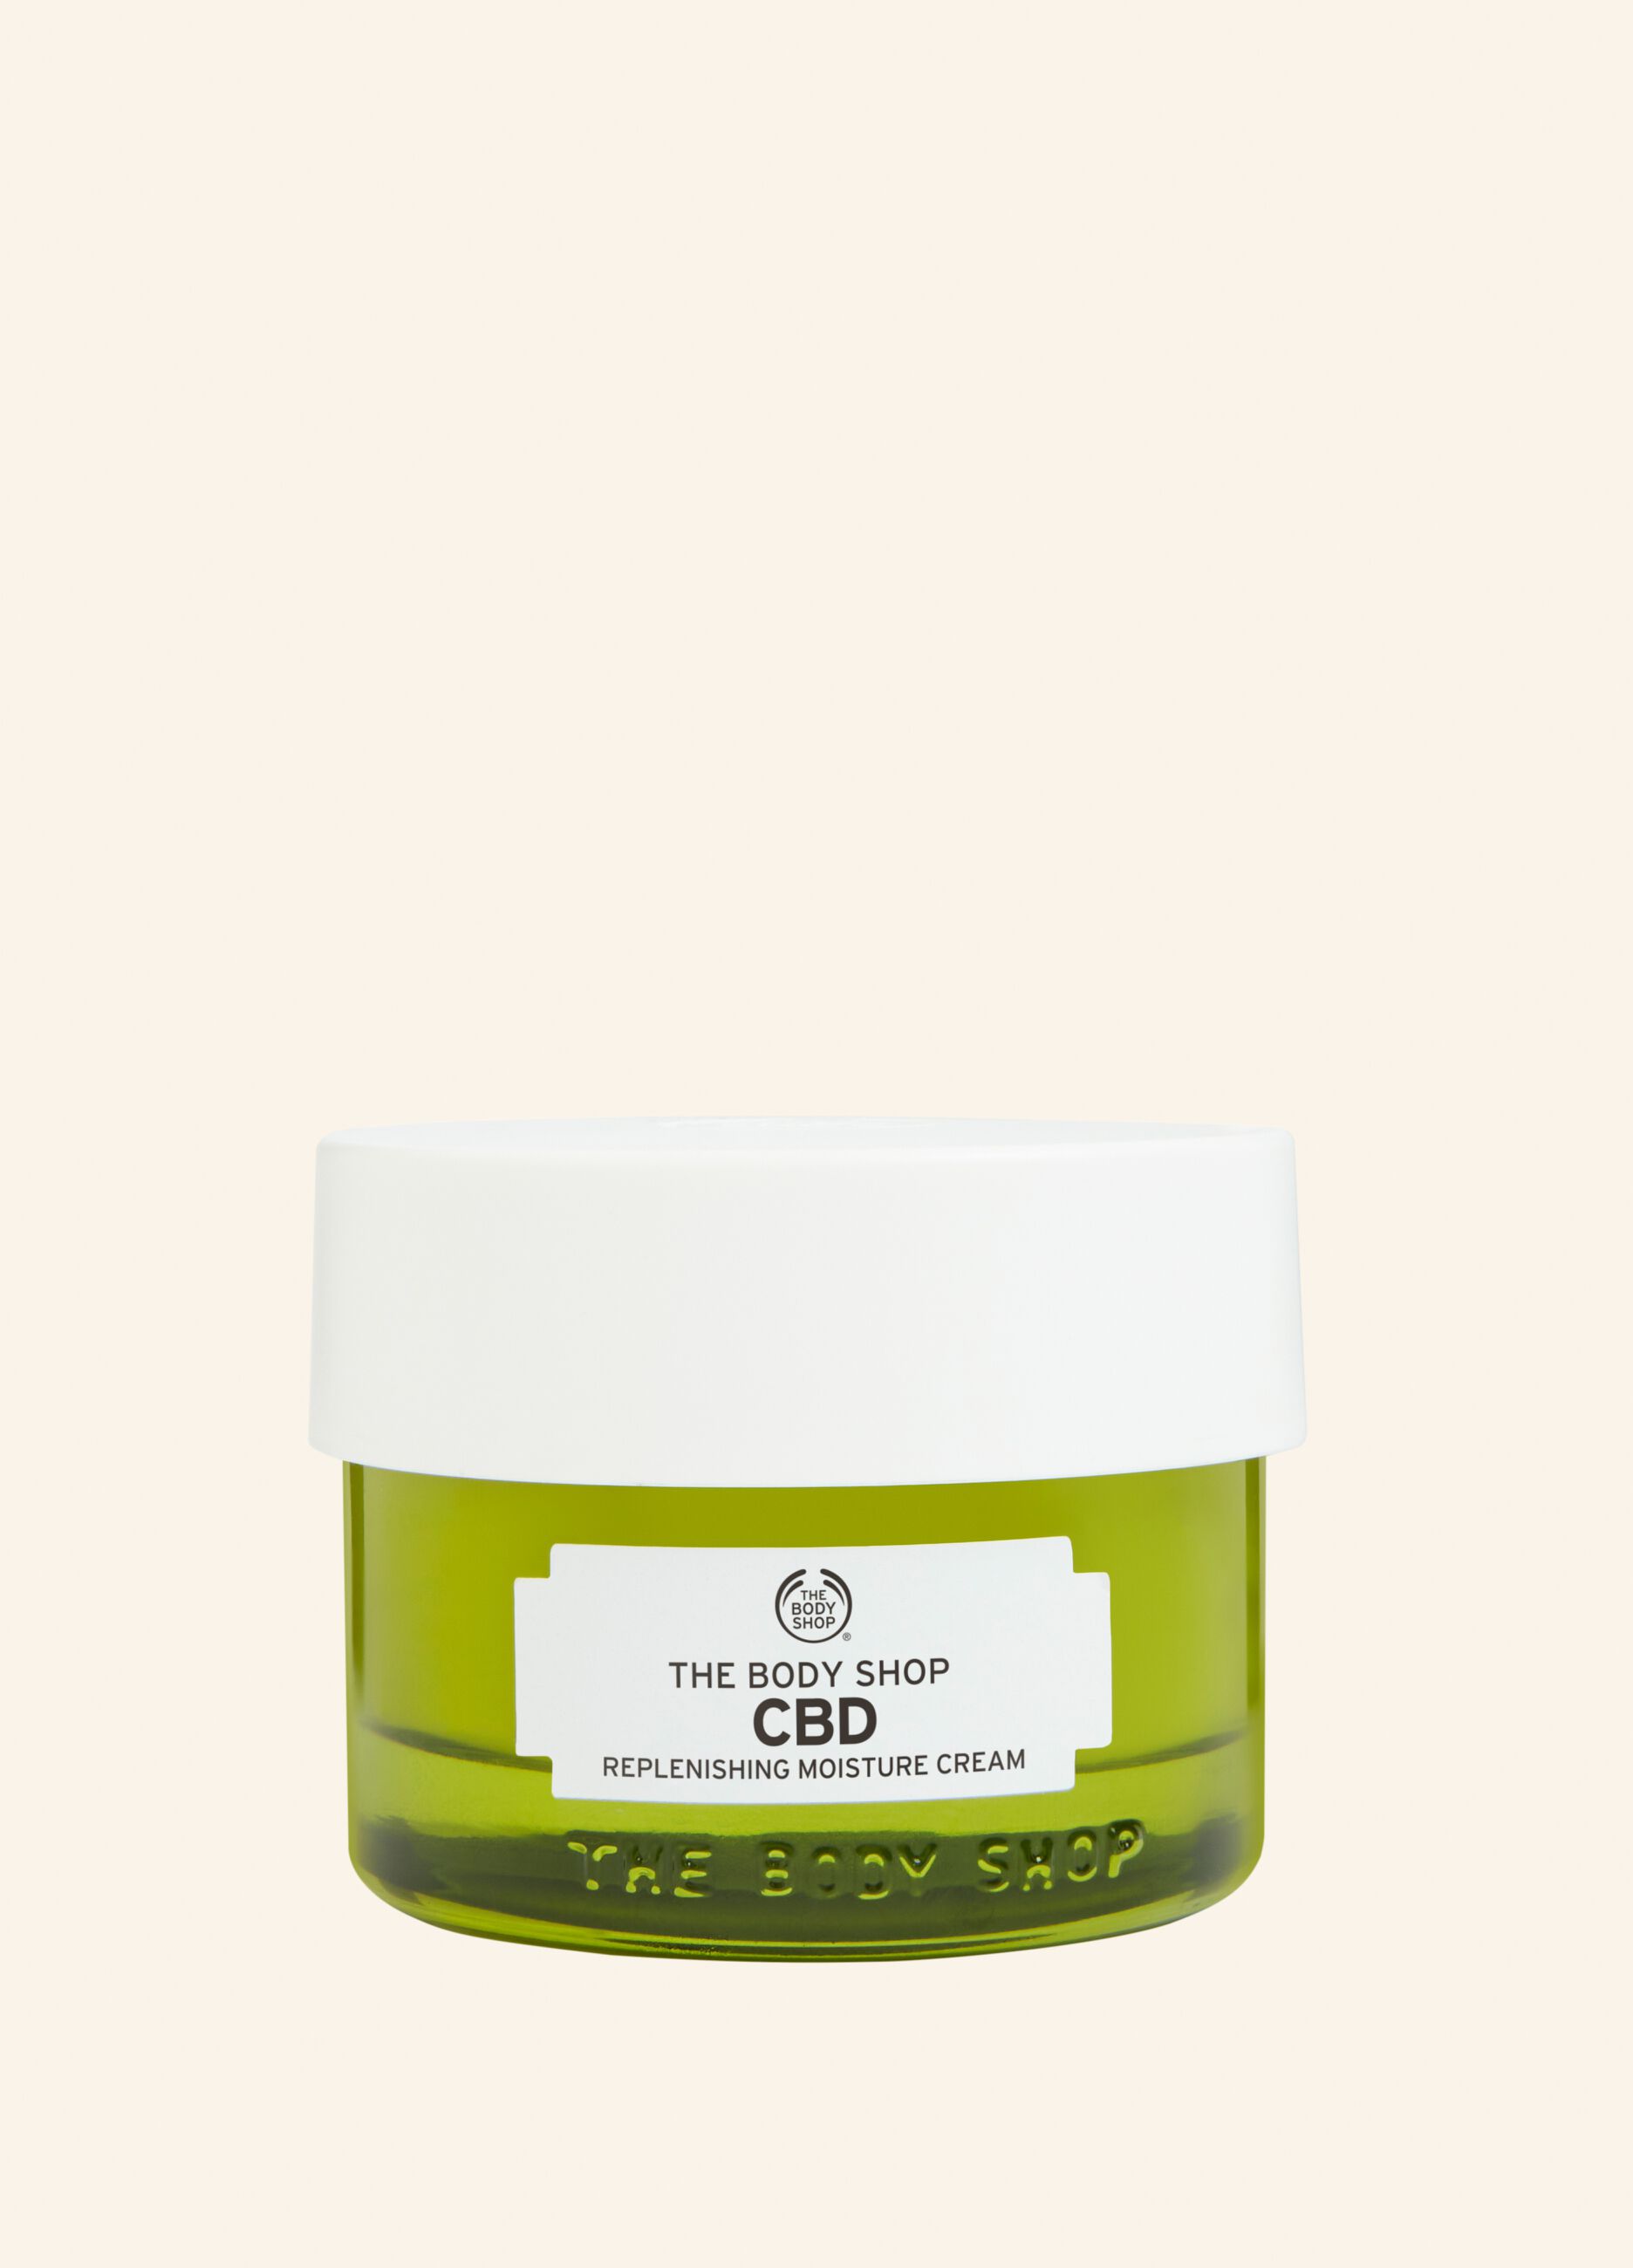 The Body Shop CBD moisturising and restorative cream